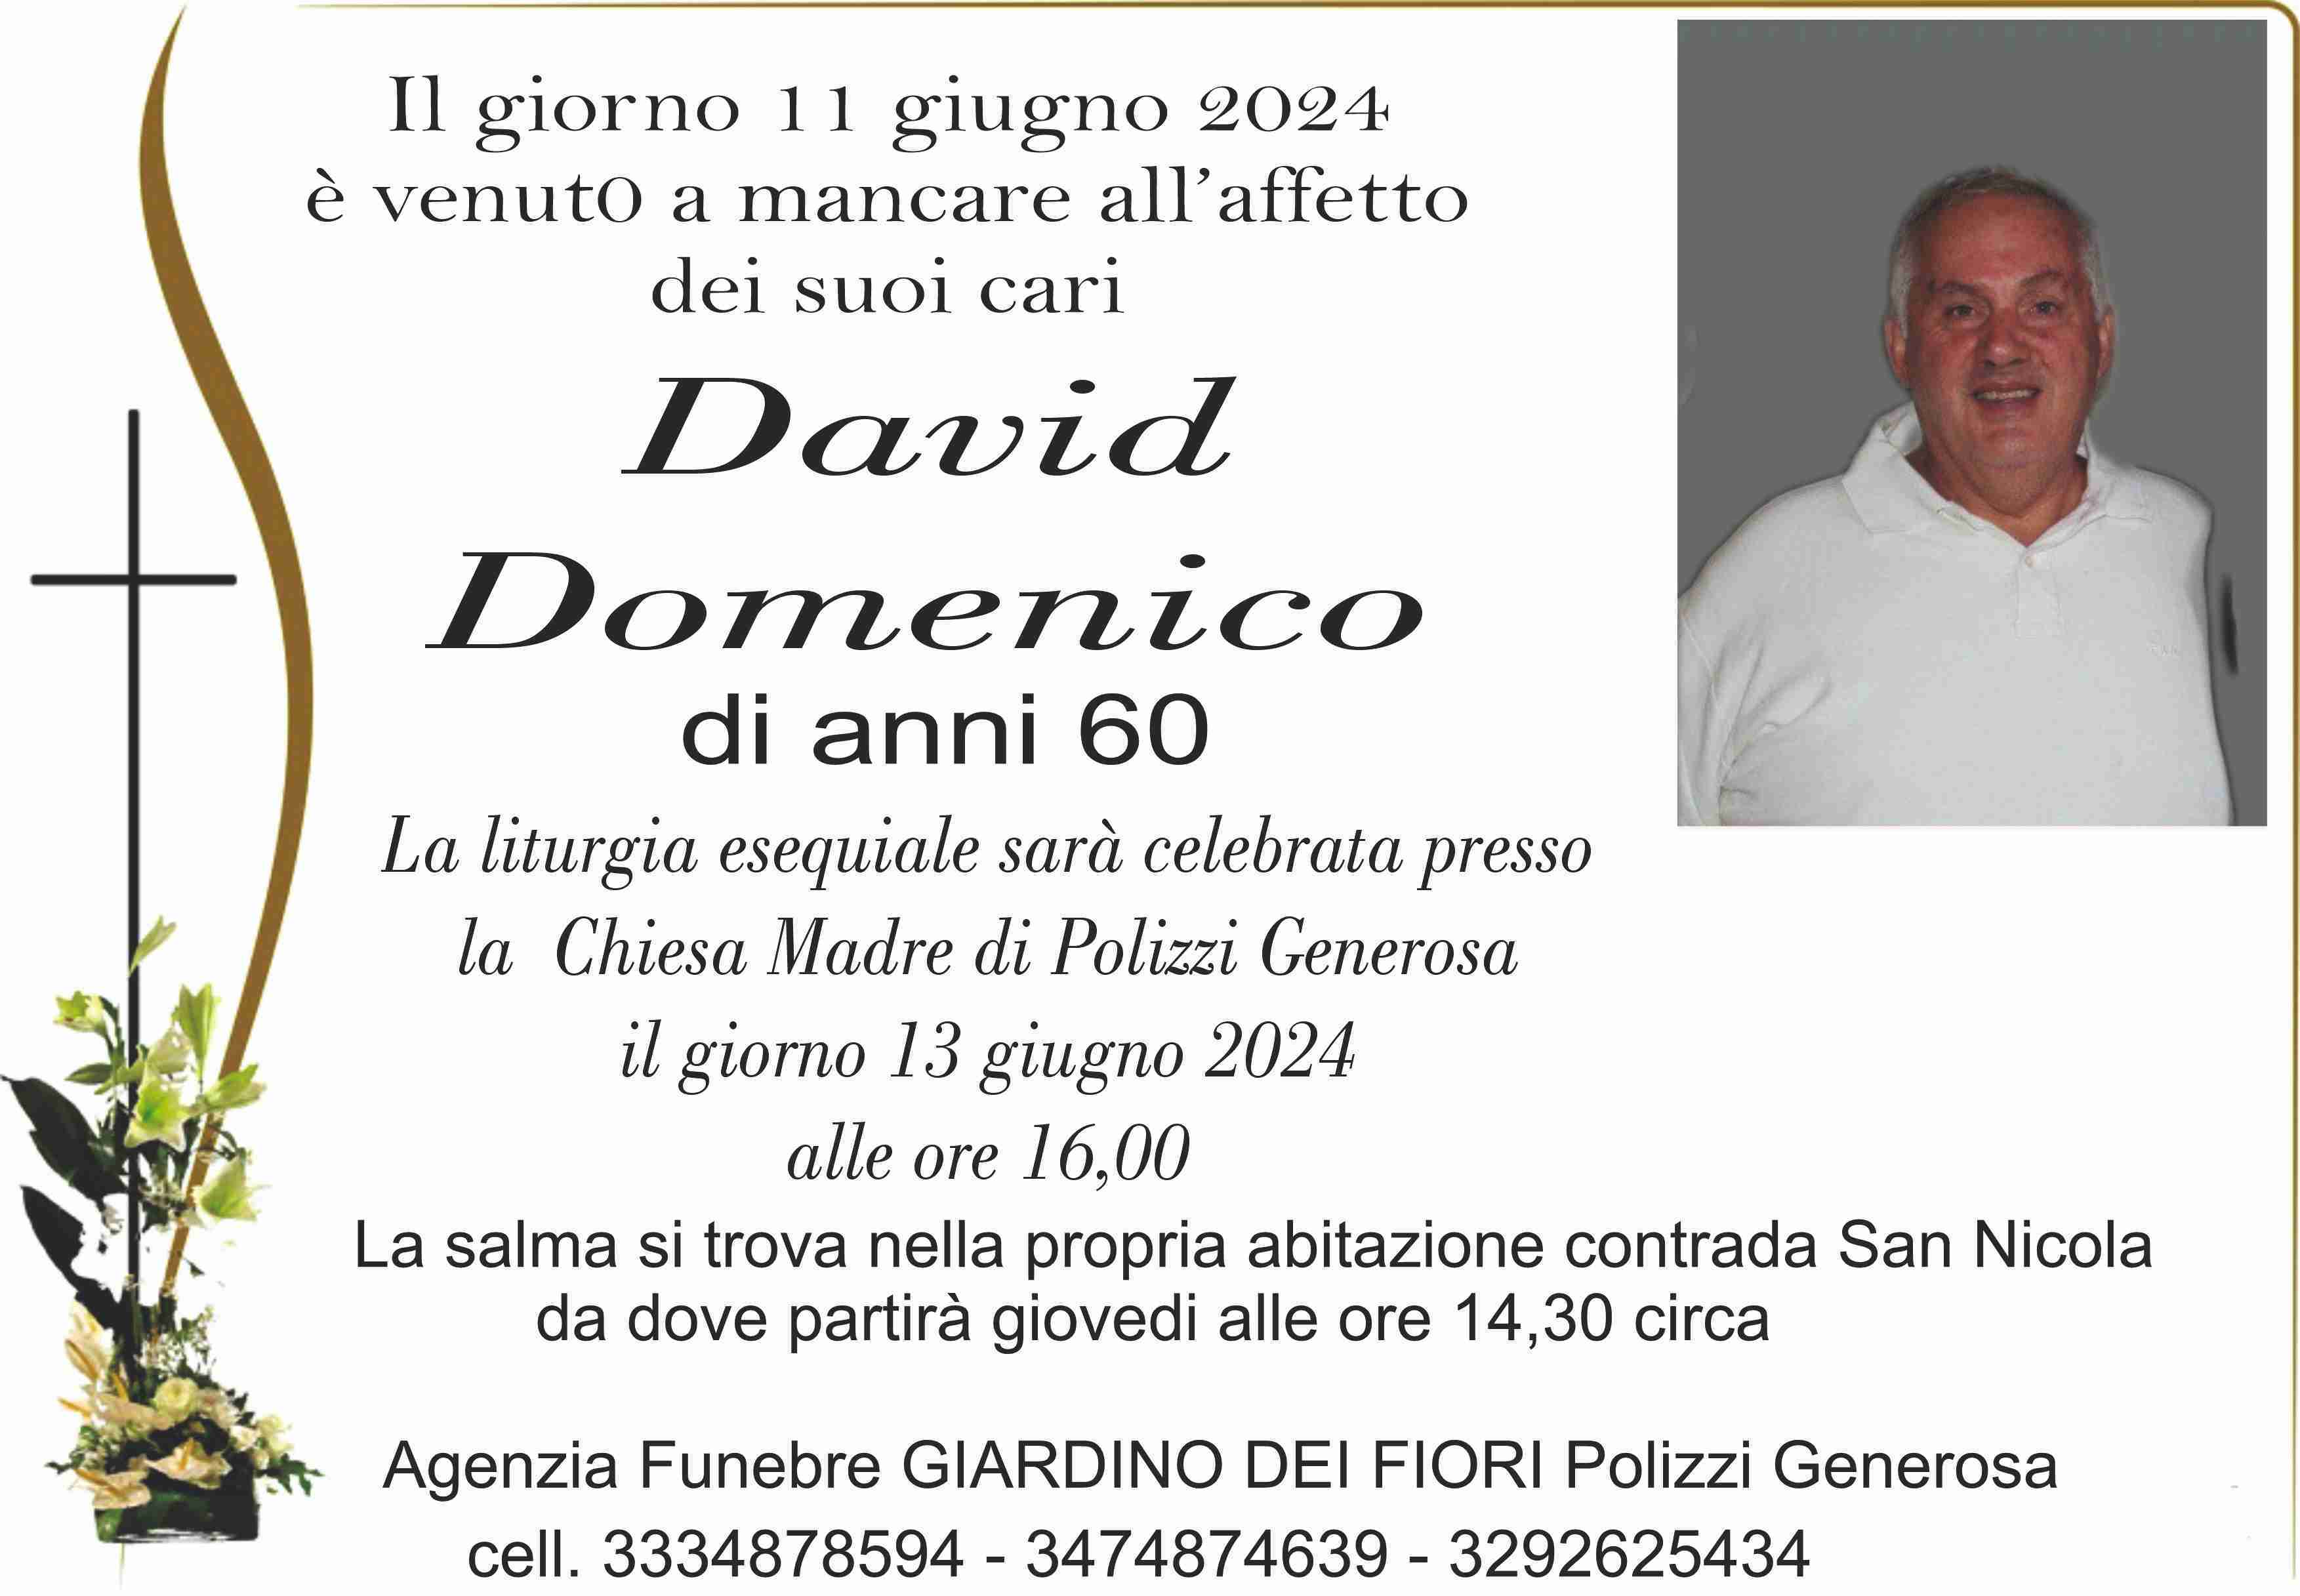 Domenico David